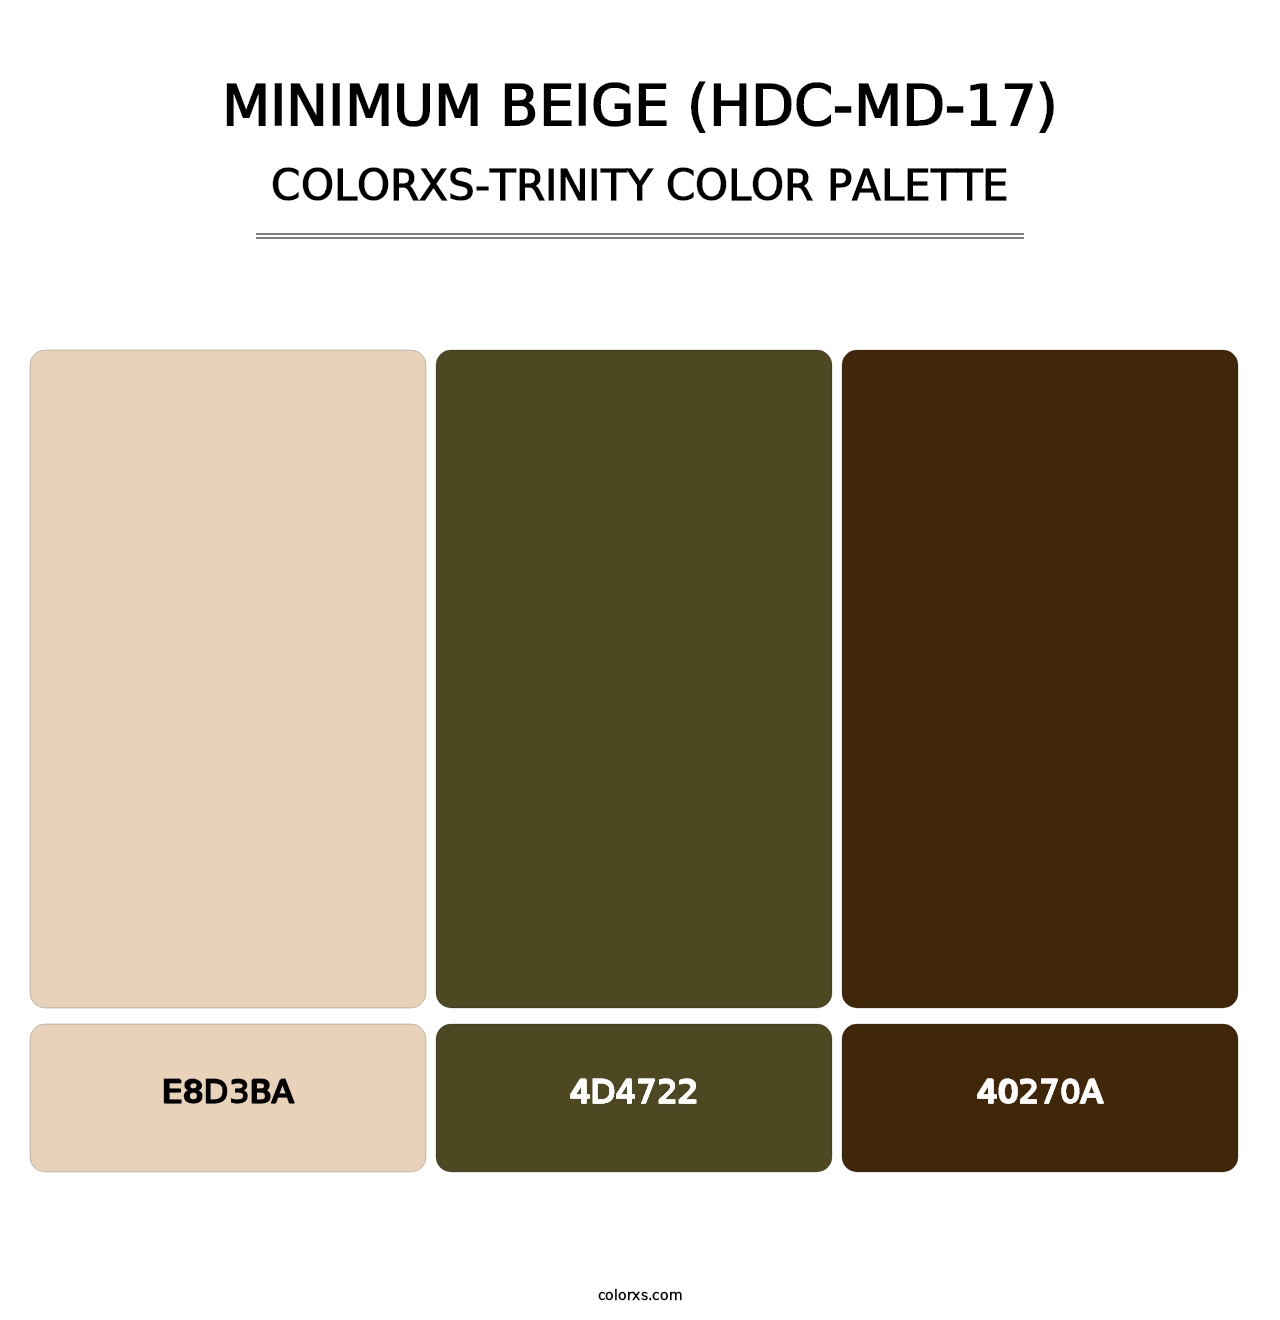 Minimum Beige (HDC-MD-17) - Colorxs Trinity Palette